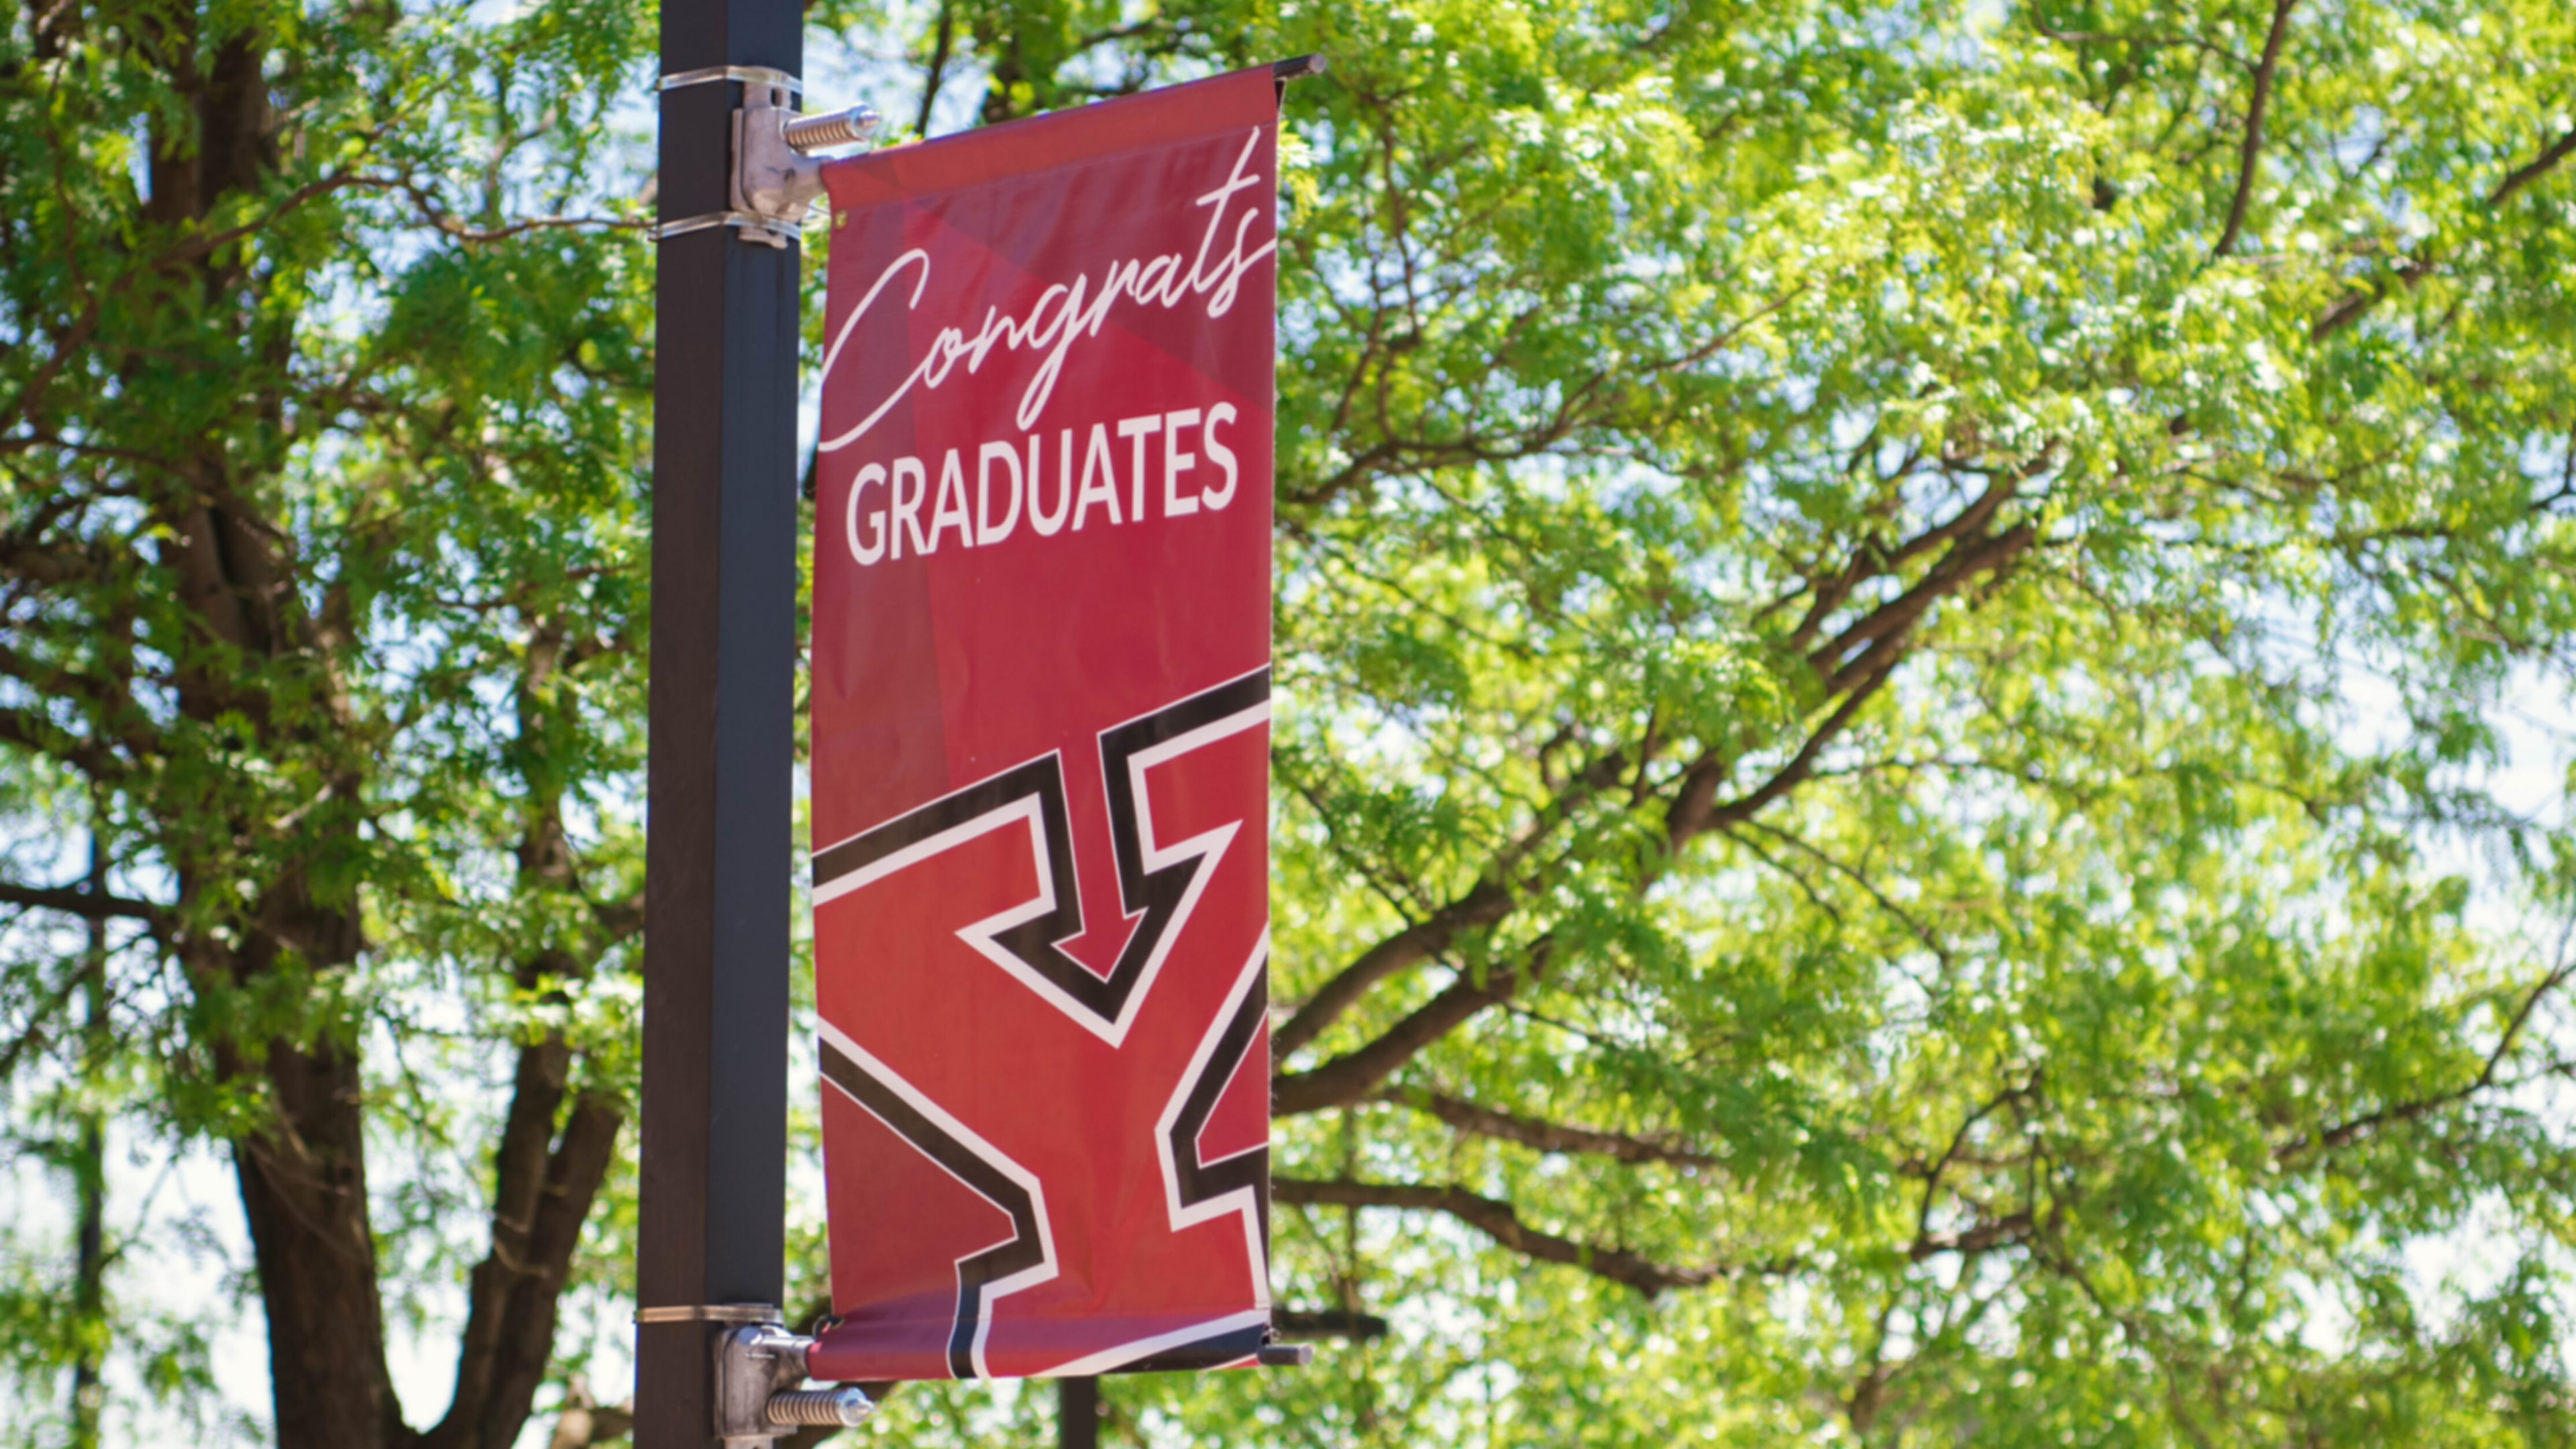 A banner on a pole reads "congrats graduates!"